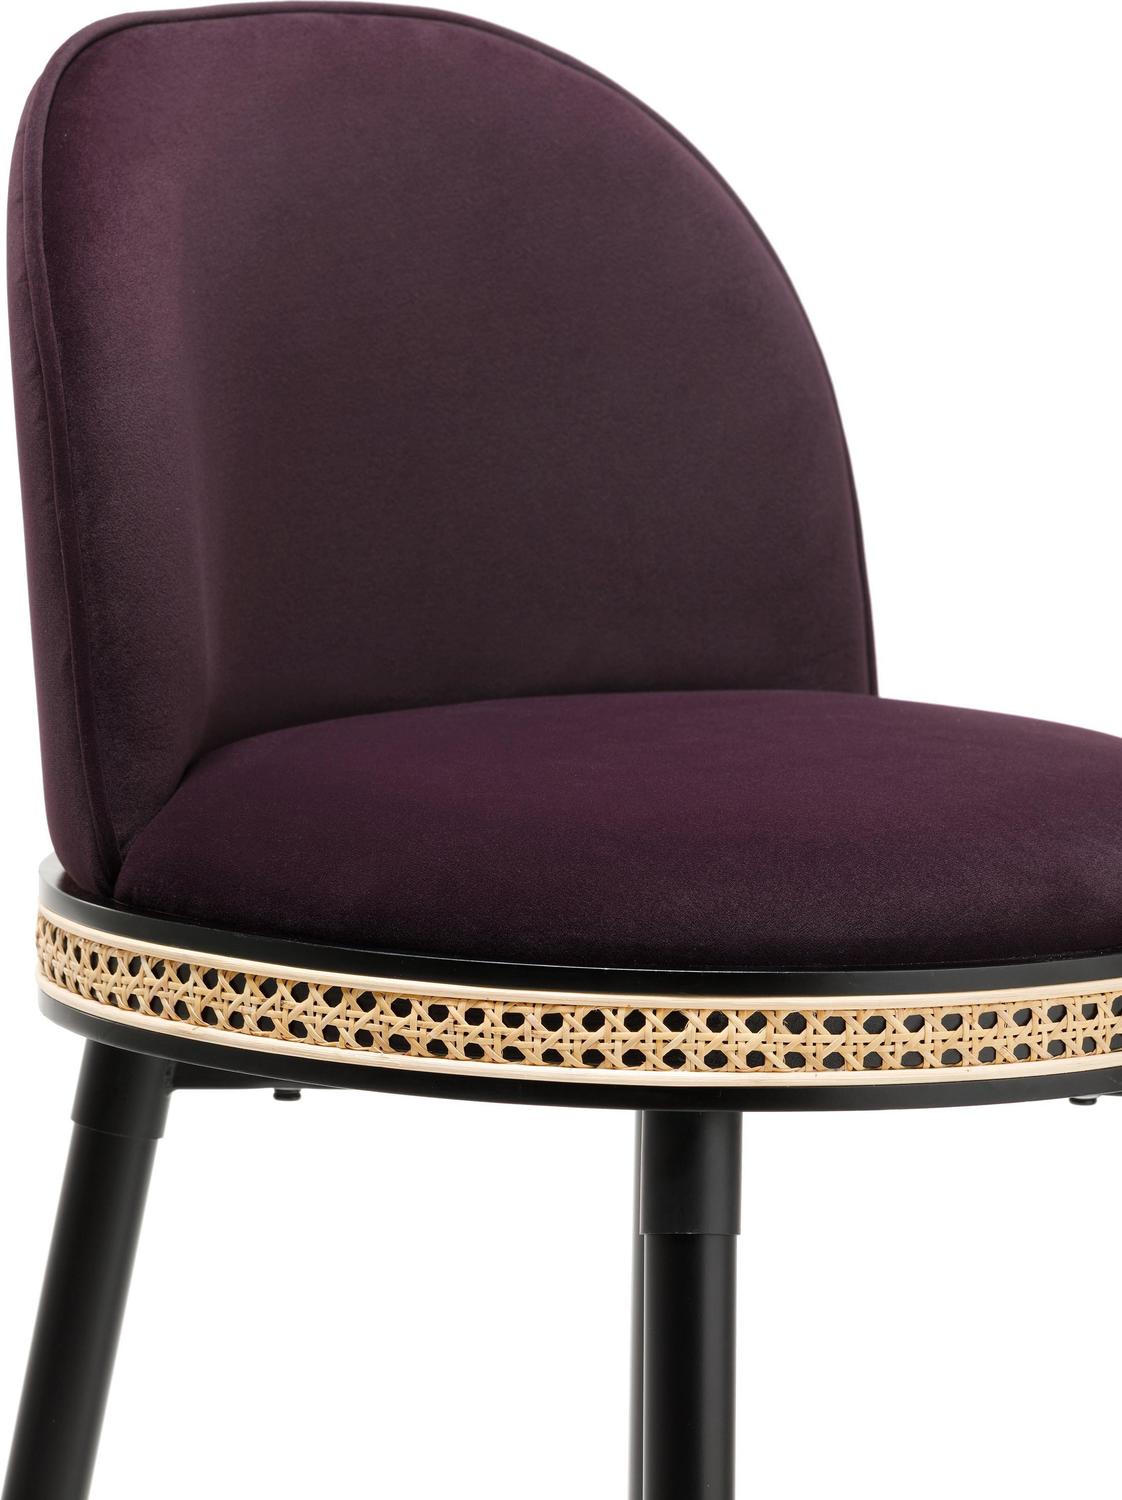 interesting bar stools Contemporary Design Furniture Stools Eggplant